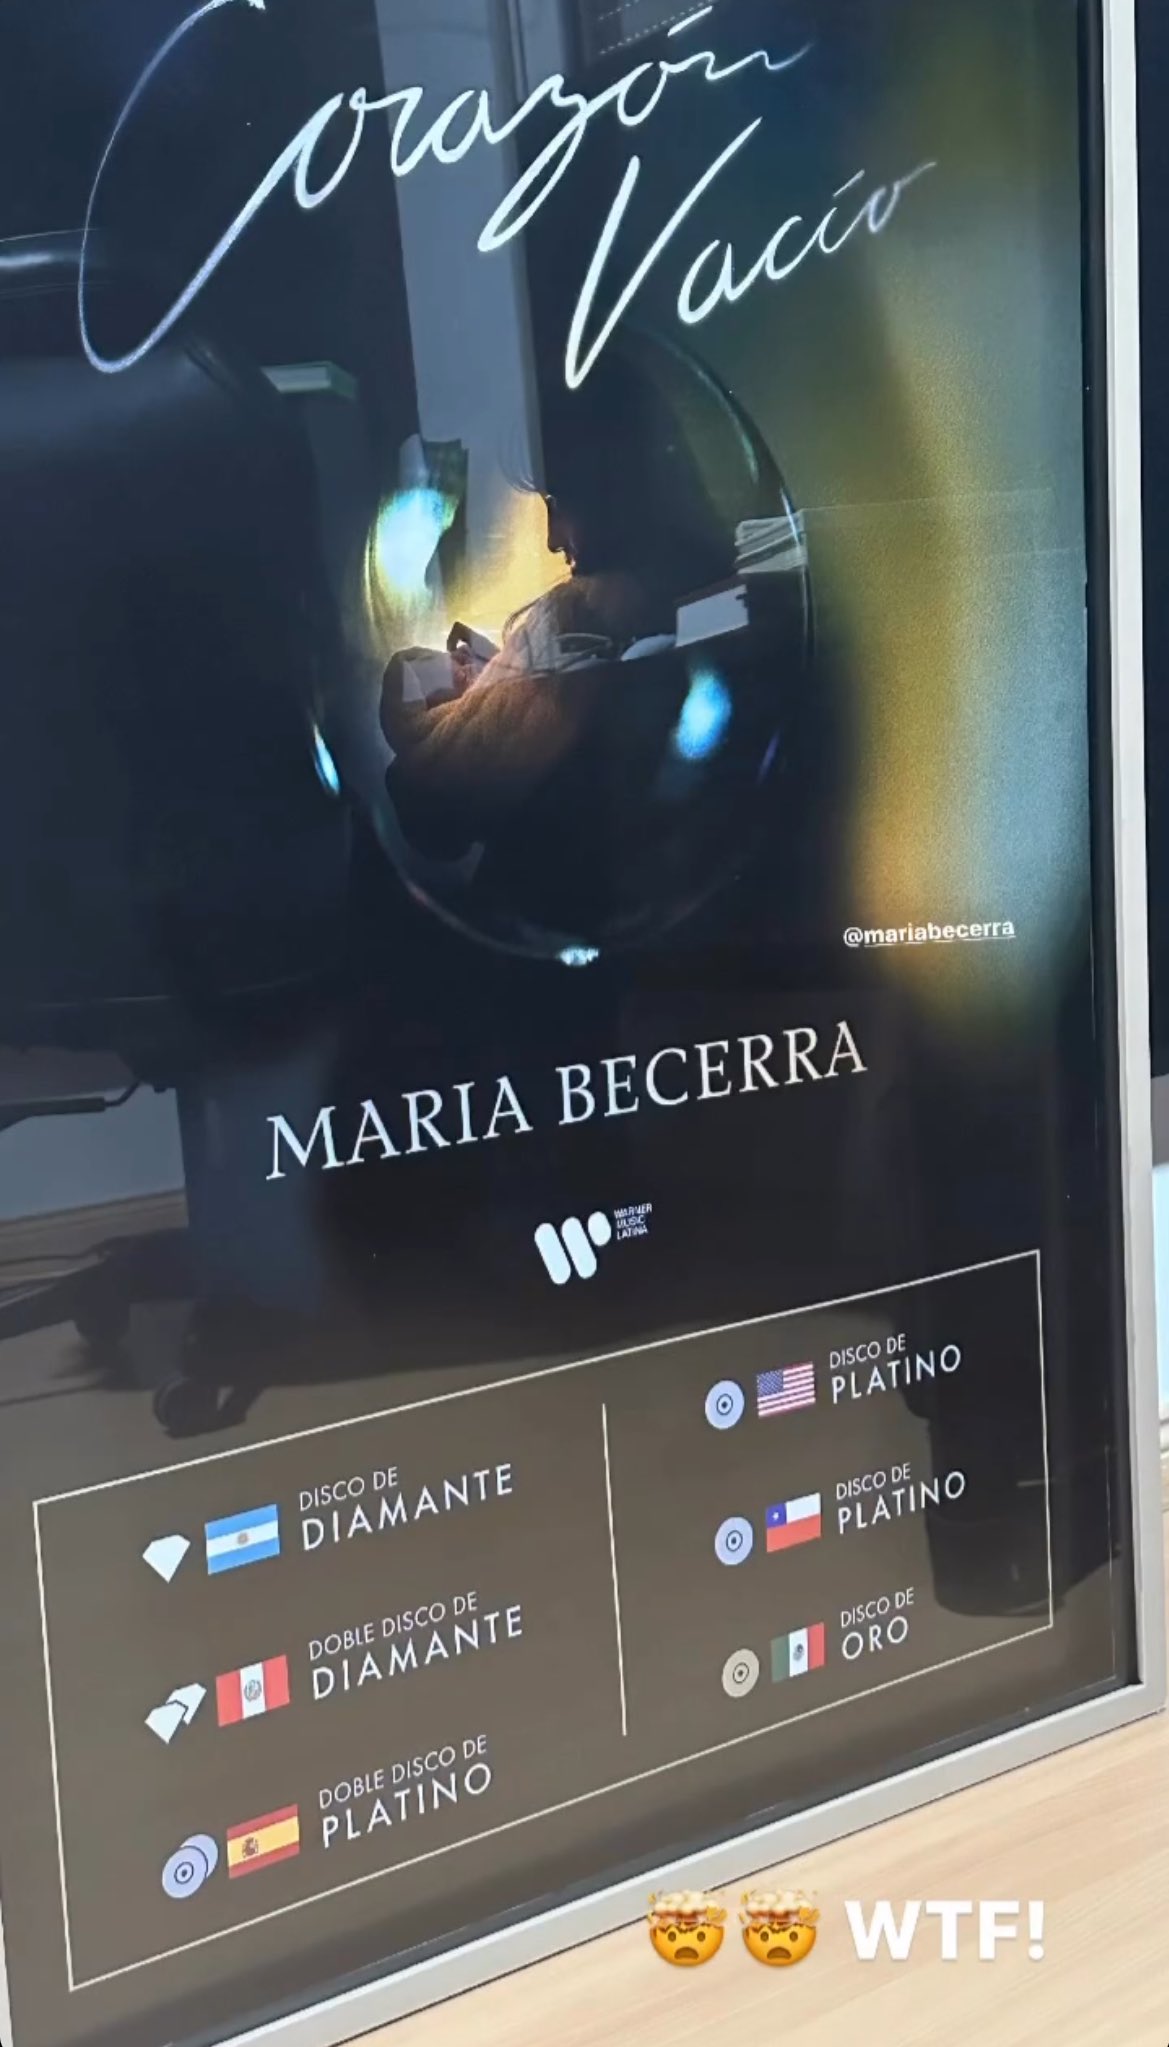 Maria Becerra Data ? on X: 